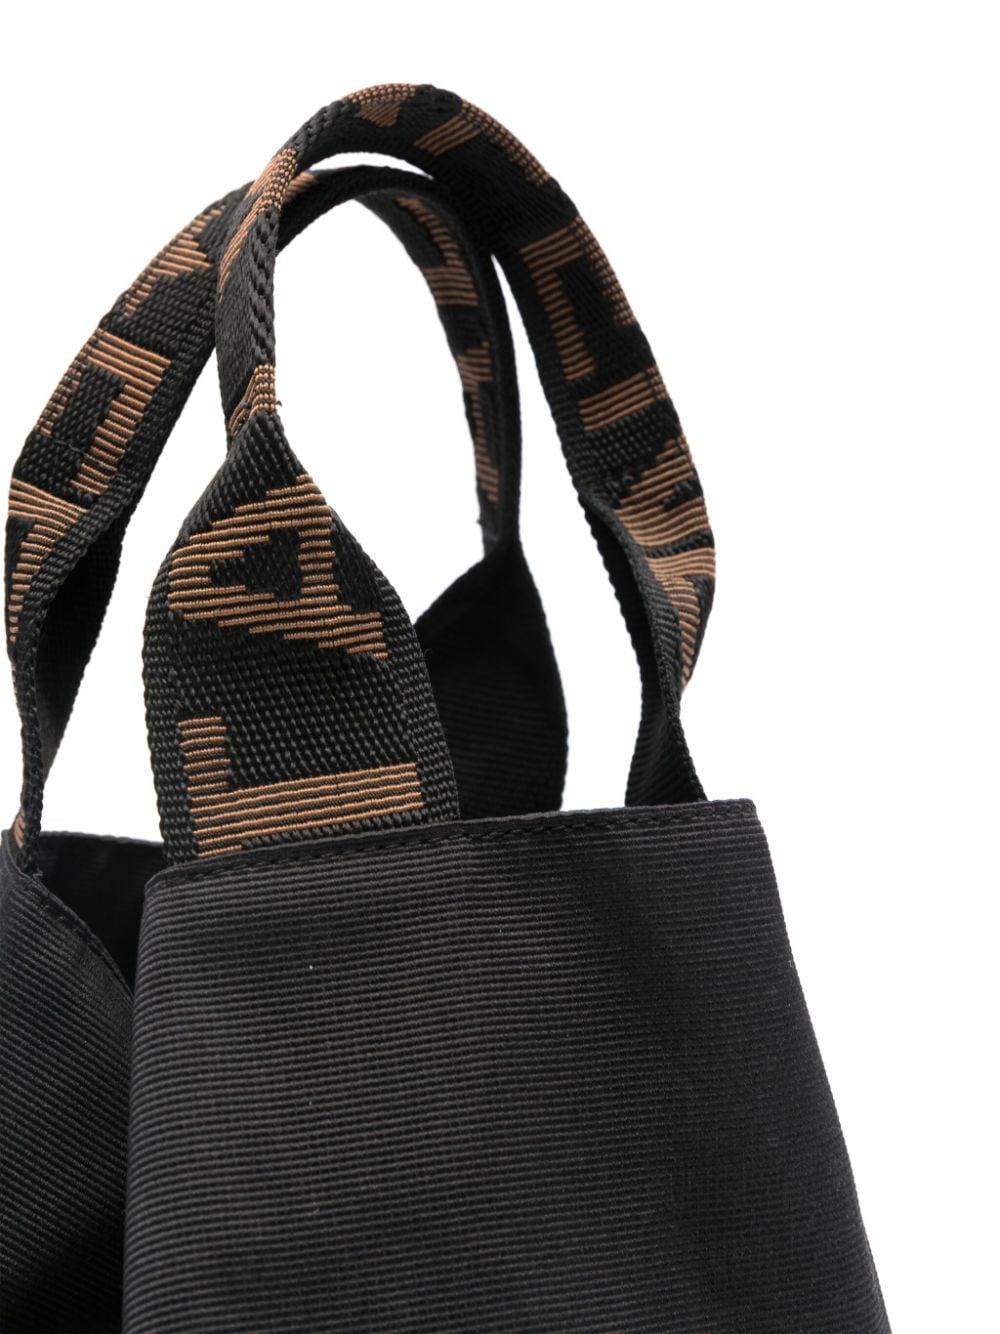 Women's Fendi Black Ottoman Bucket Handbag For Sale